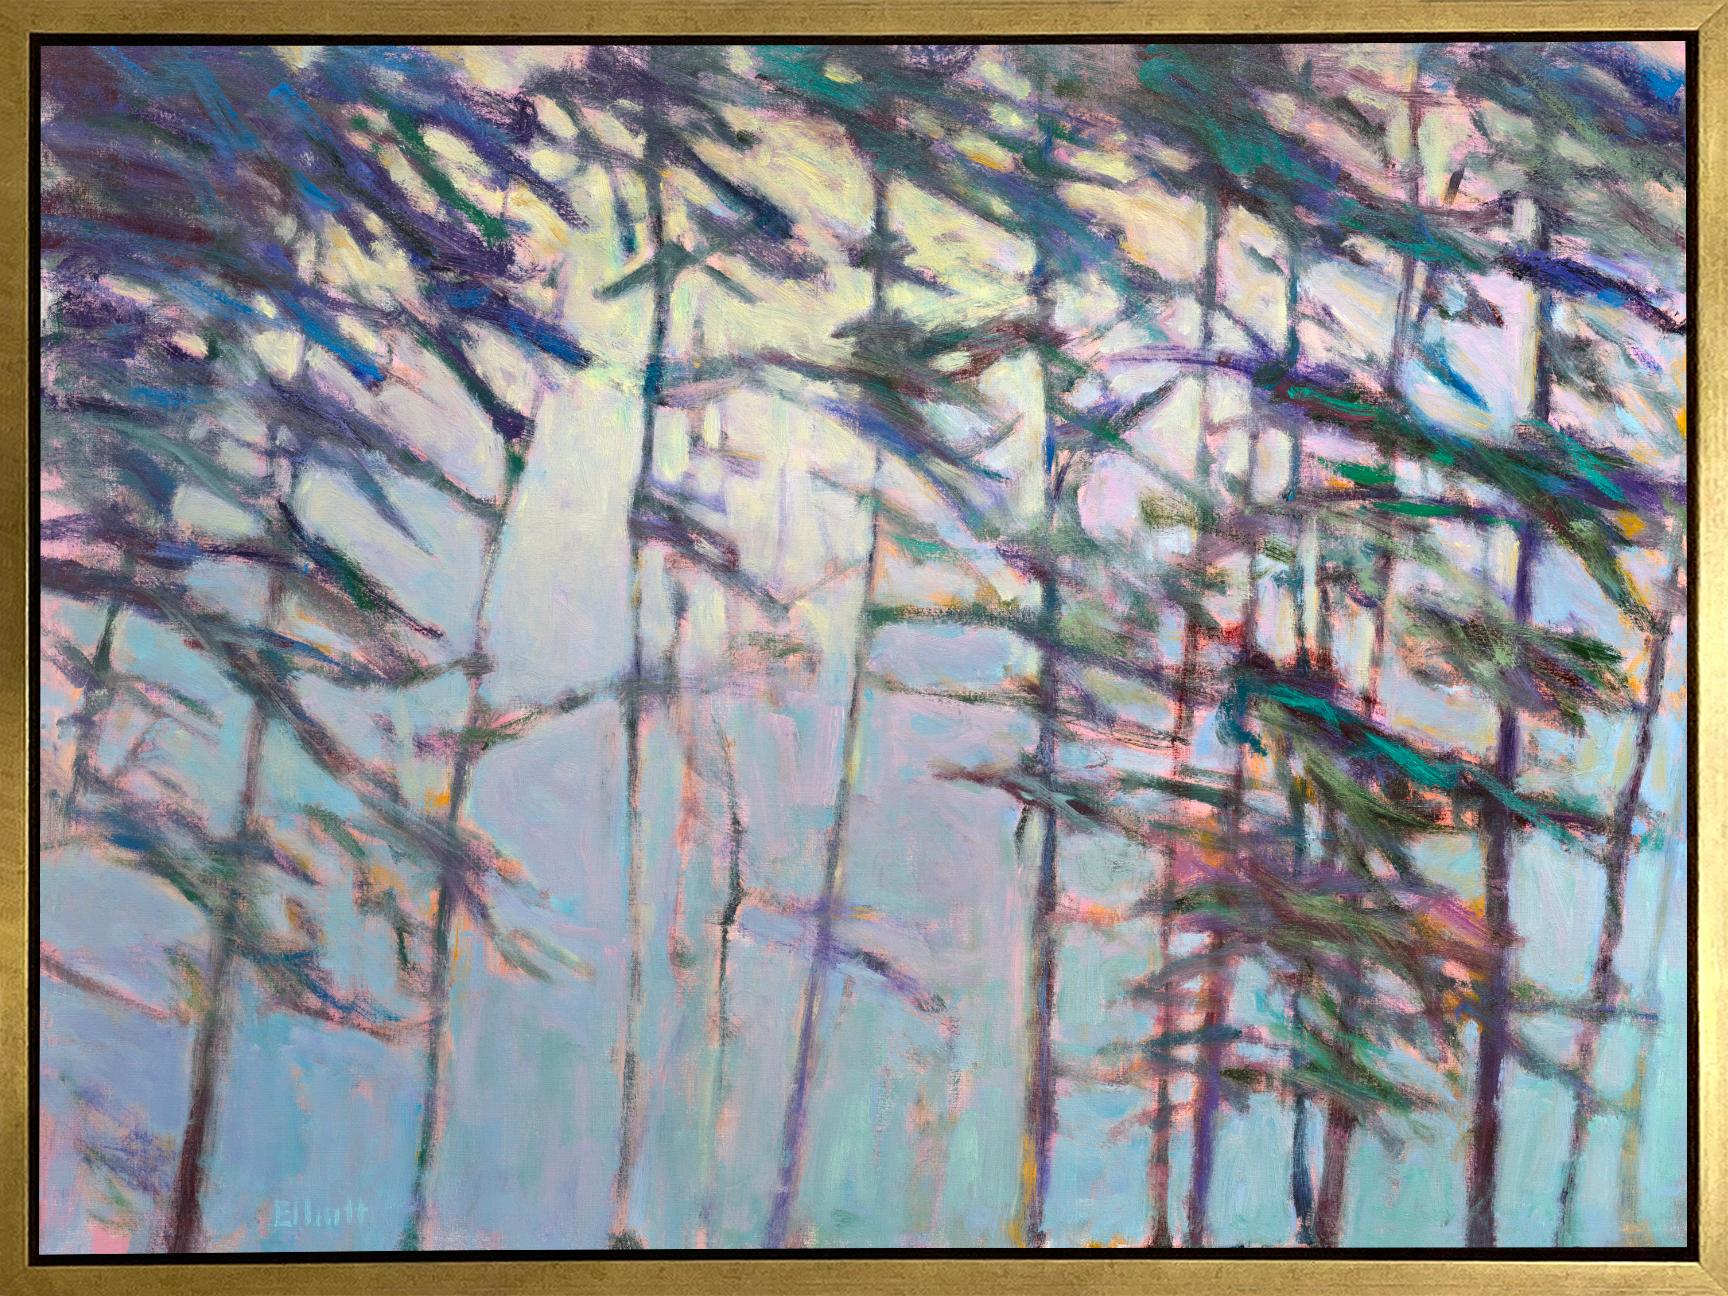 Ken Elliott Landscape Print - "Light Emerging - Diffused Blue, " Framed Limited Edition Giclee Print, 18" x 24"